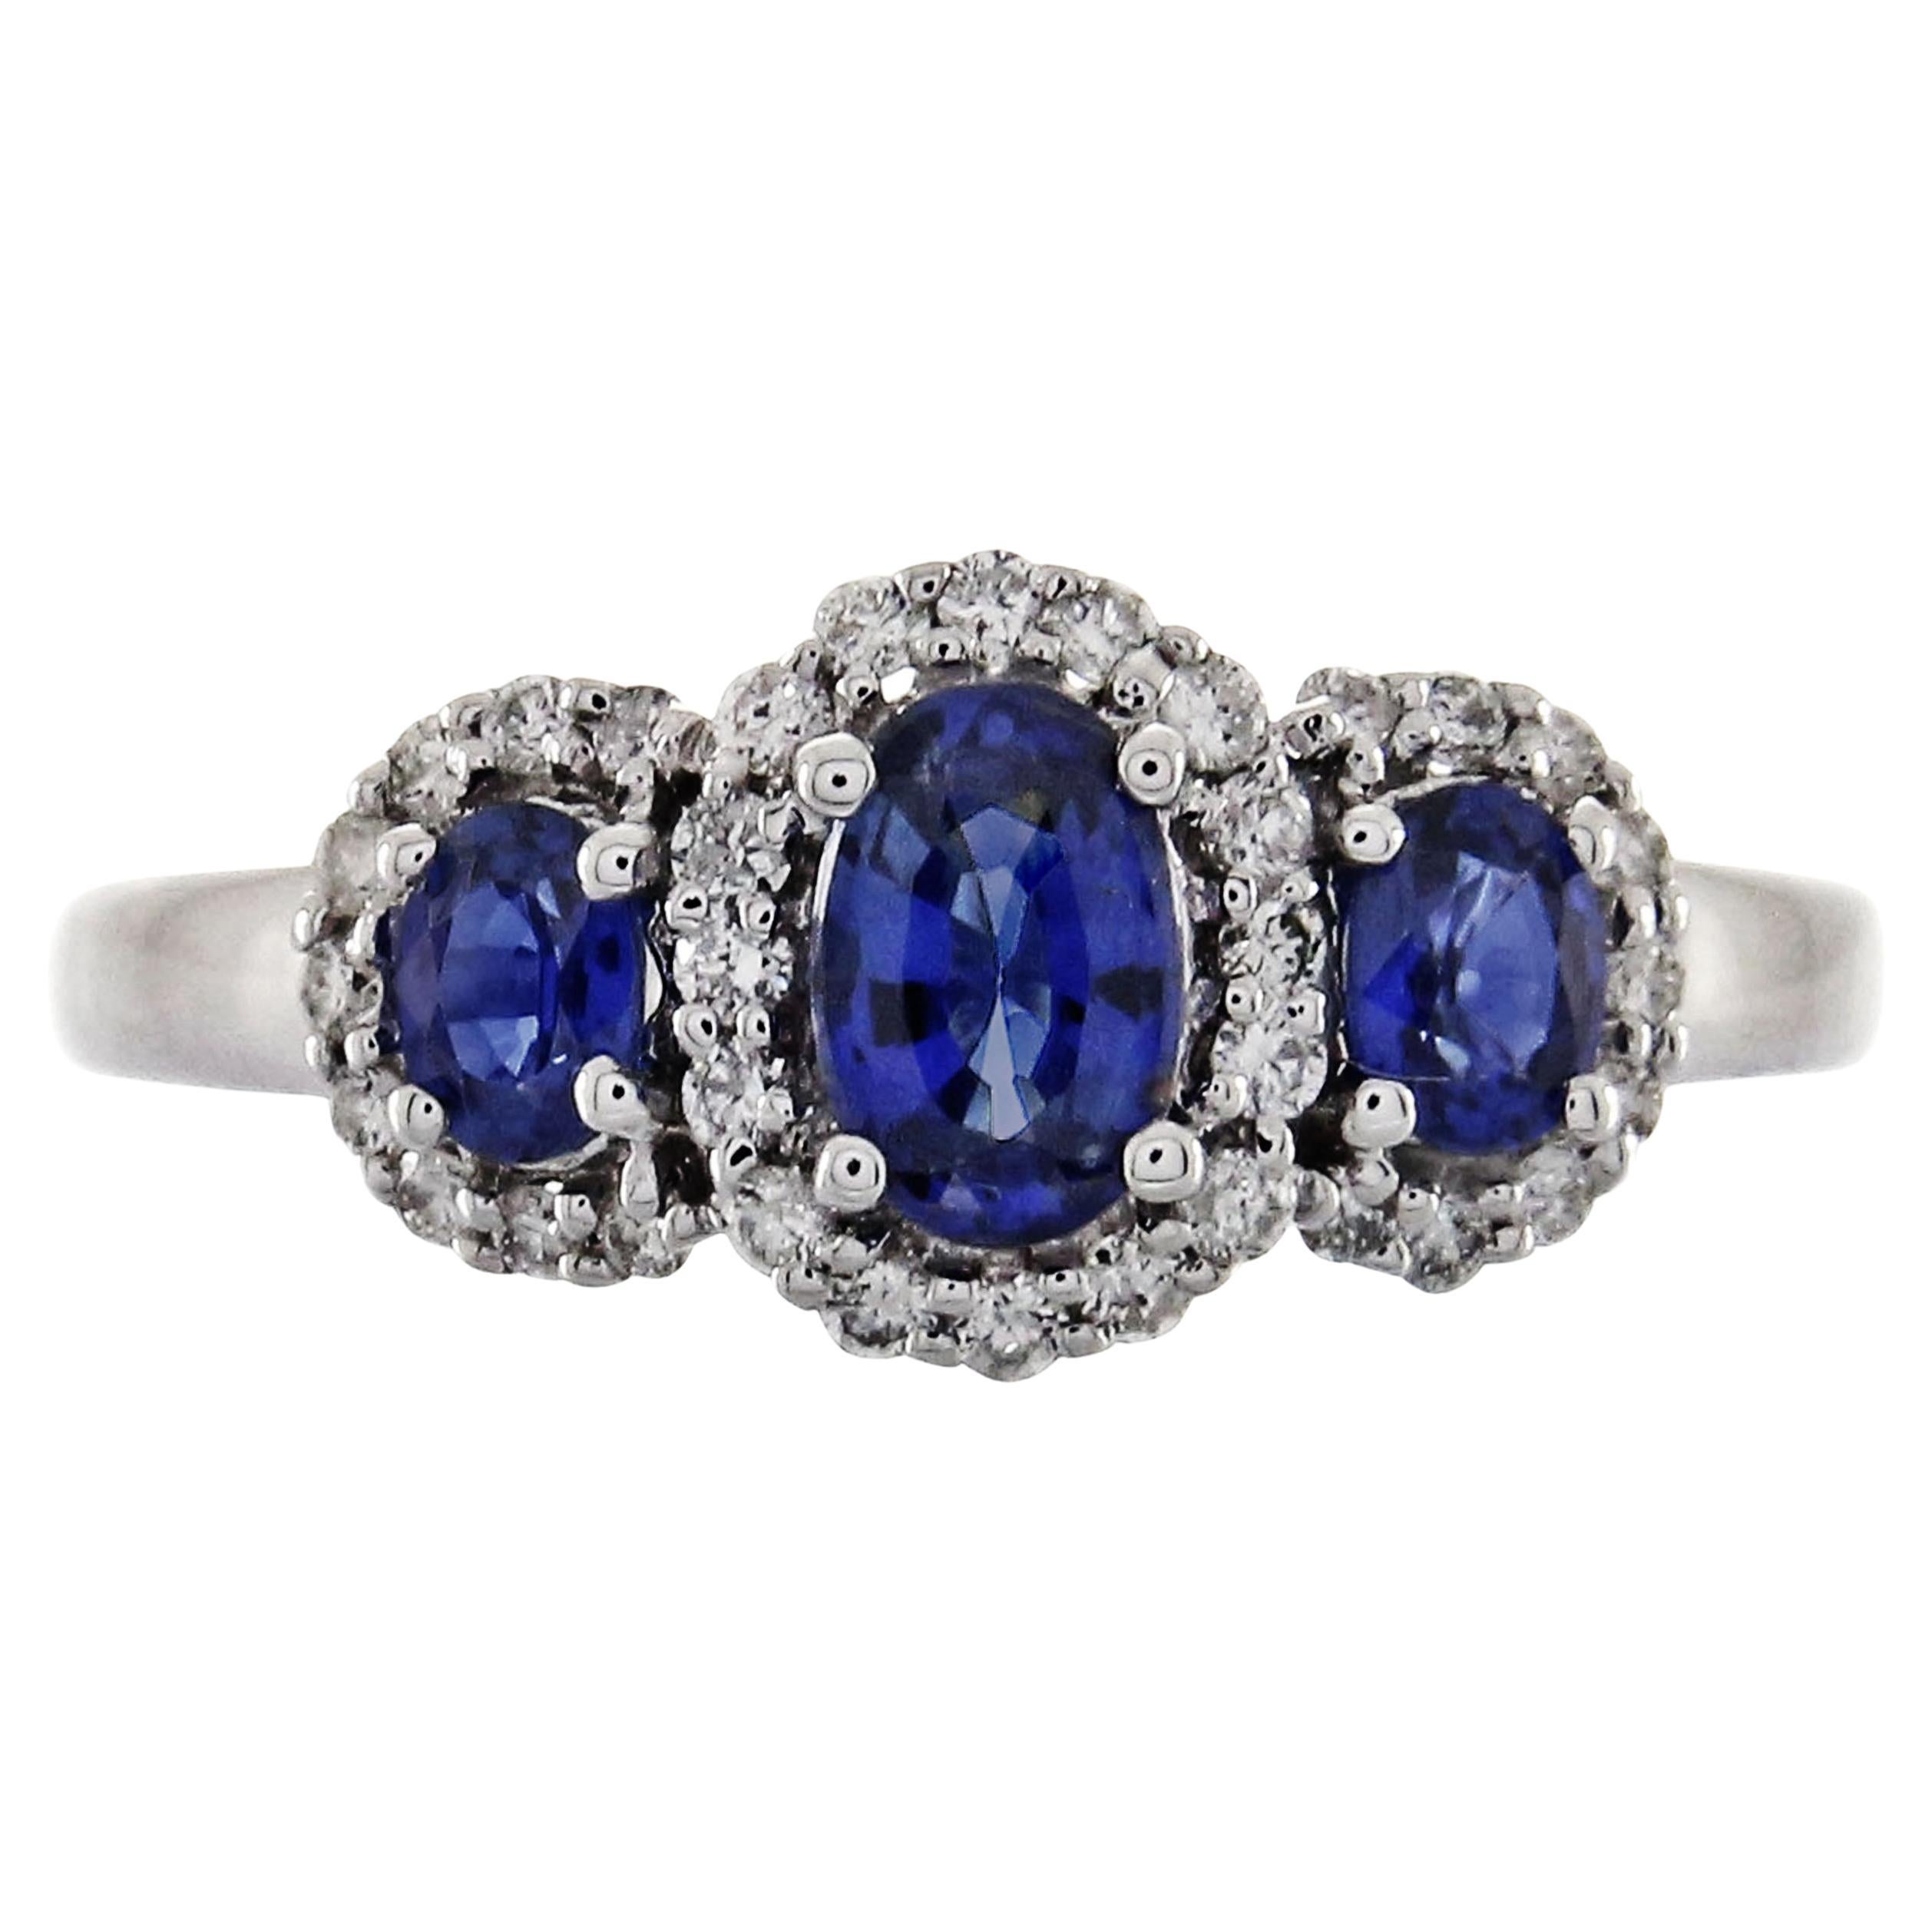 1.15 Carat Oval-Cut Blue Sapphire Diamond Accents 14K White Gold Bridal Ring